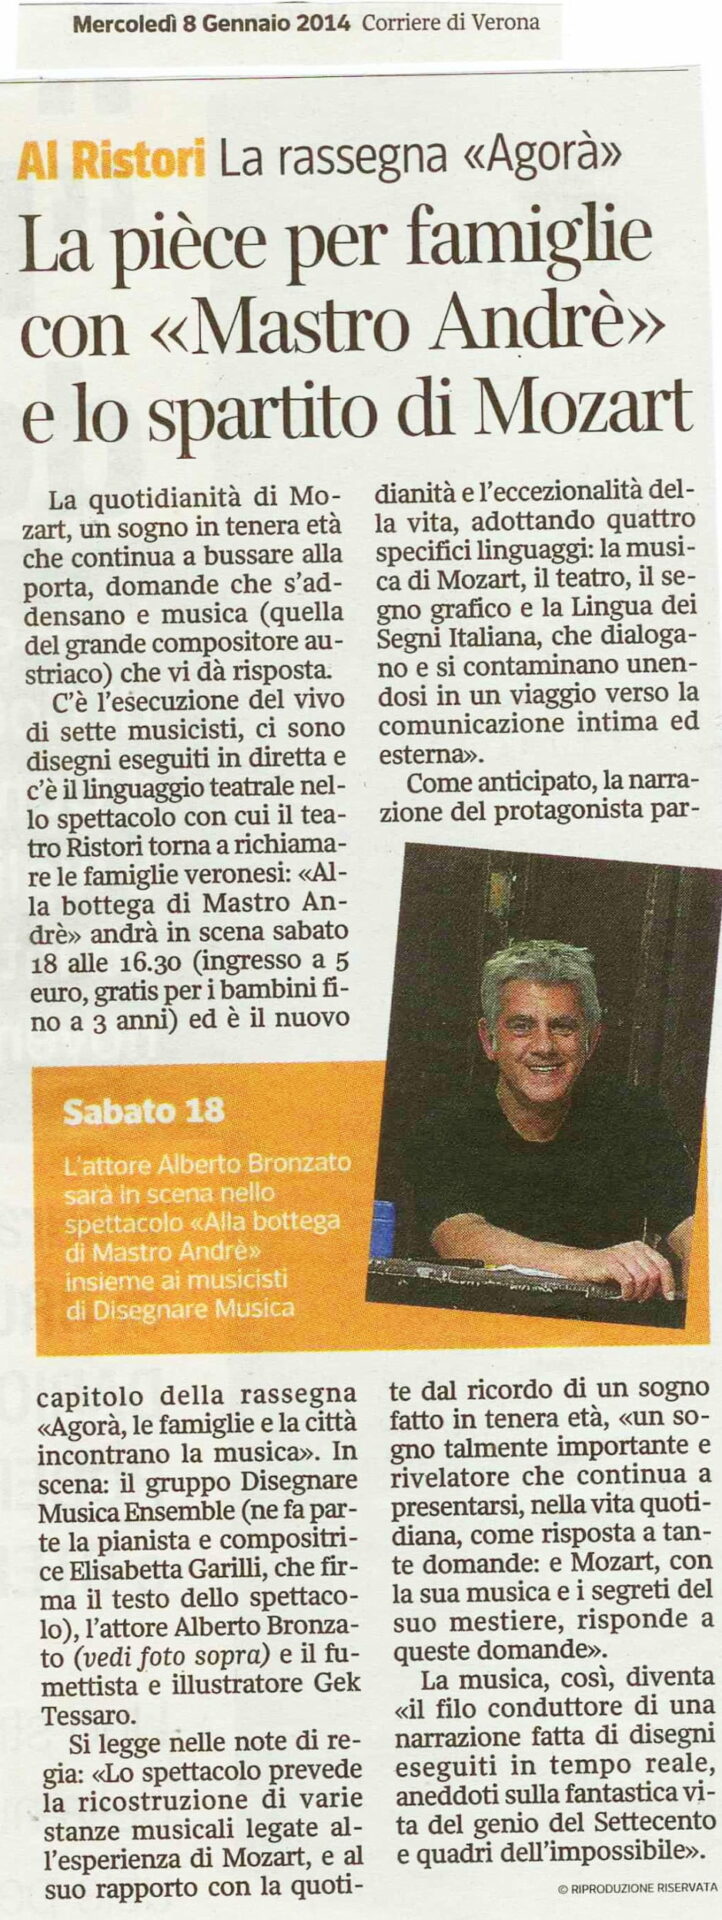 Agora Corriere Veneto 8 gennaio 2014